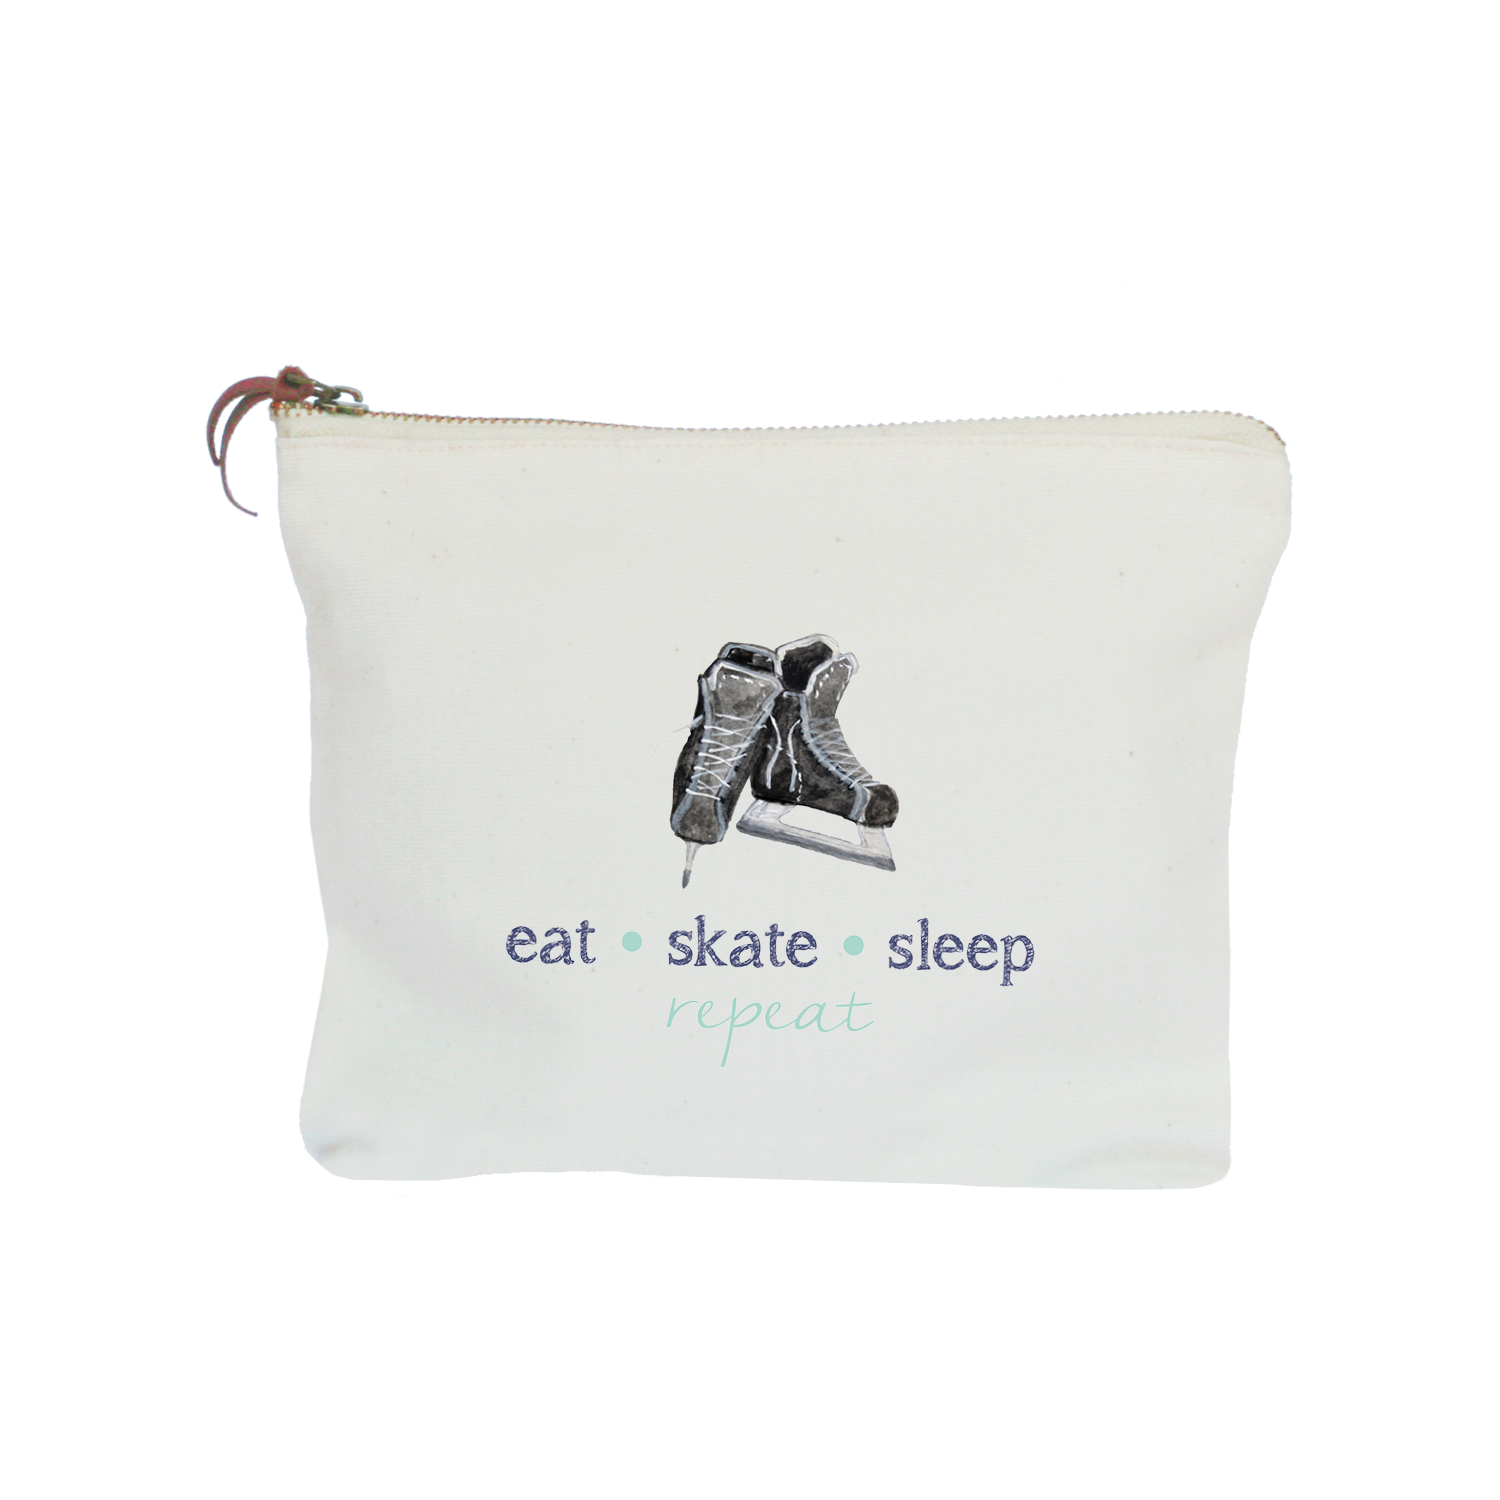 eat skate sleep repeat zipper pouch